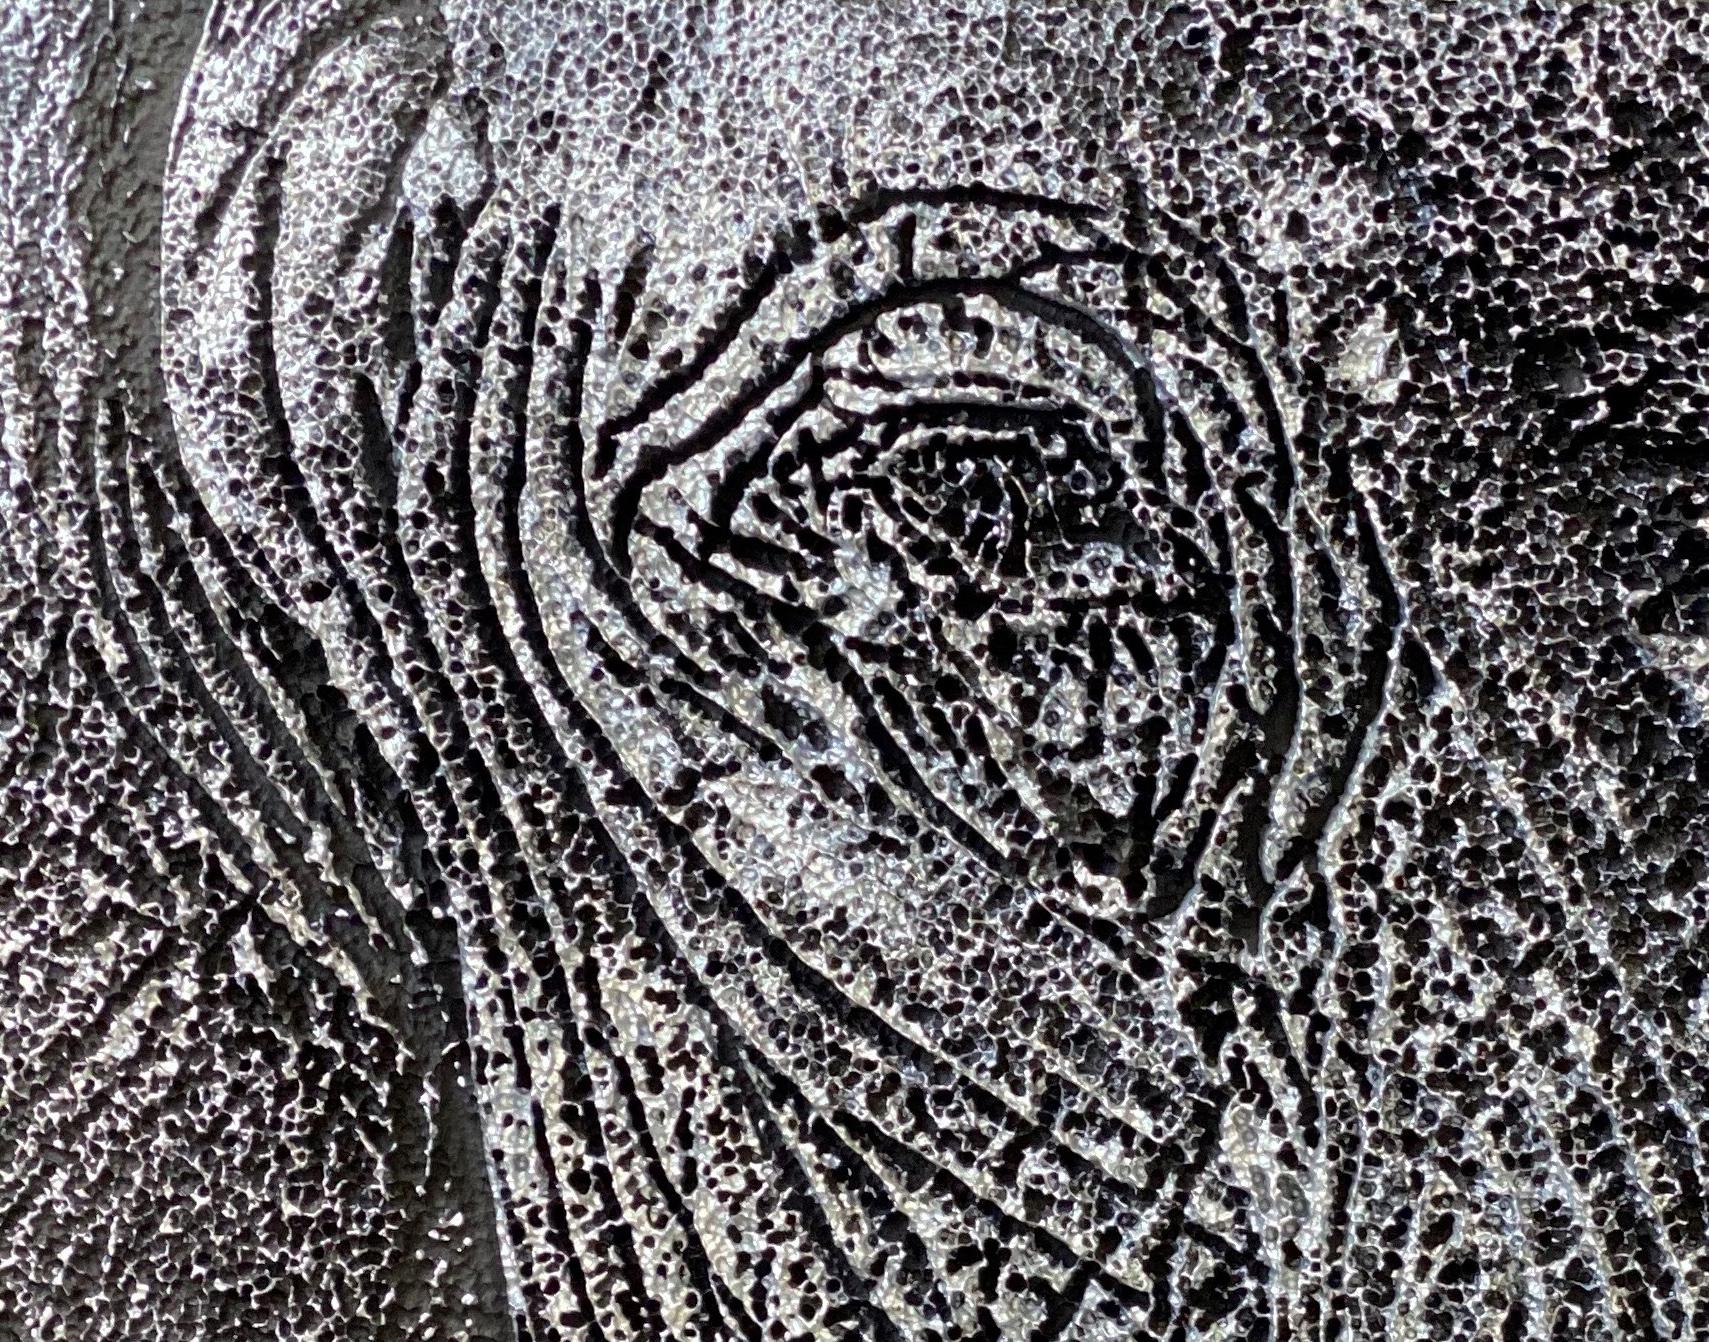 Silver Look - Elephant Representation - Painting by Yann C